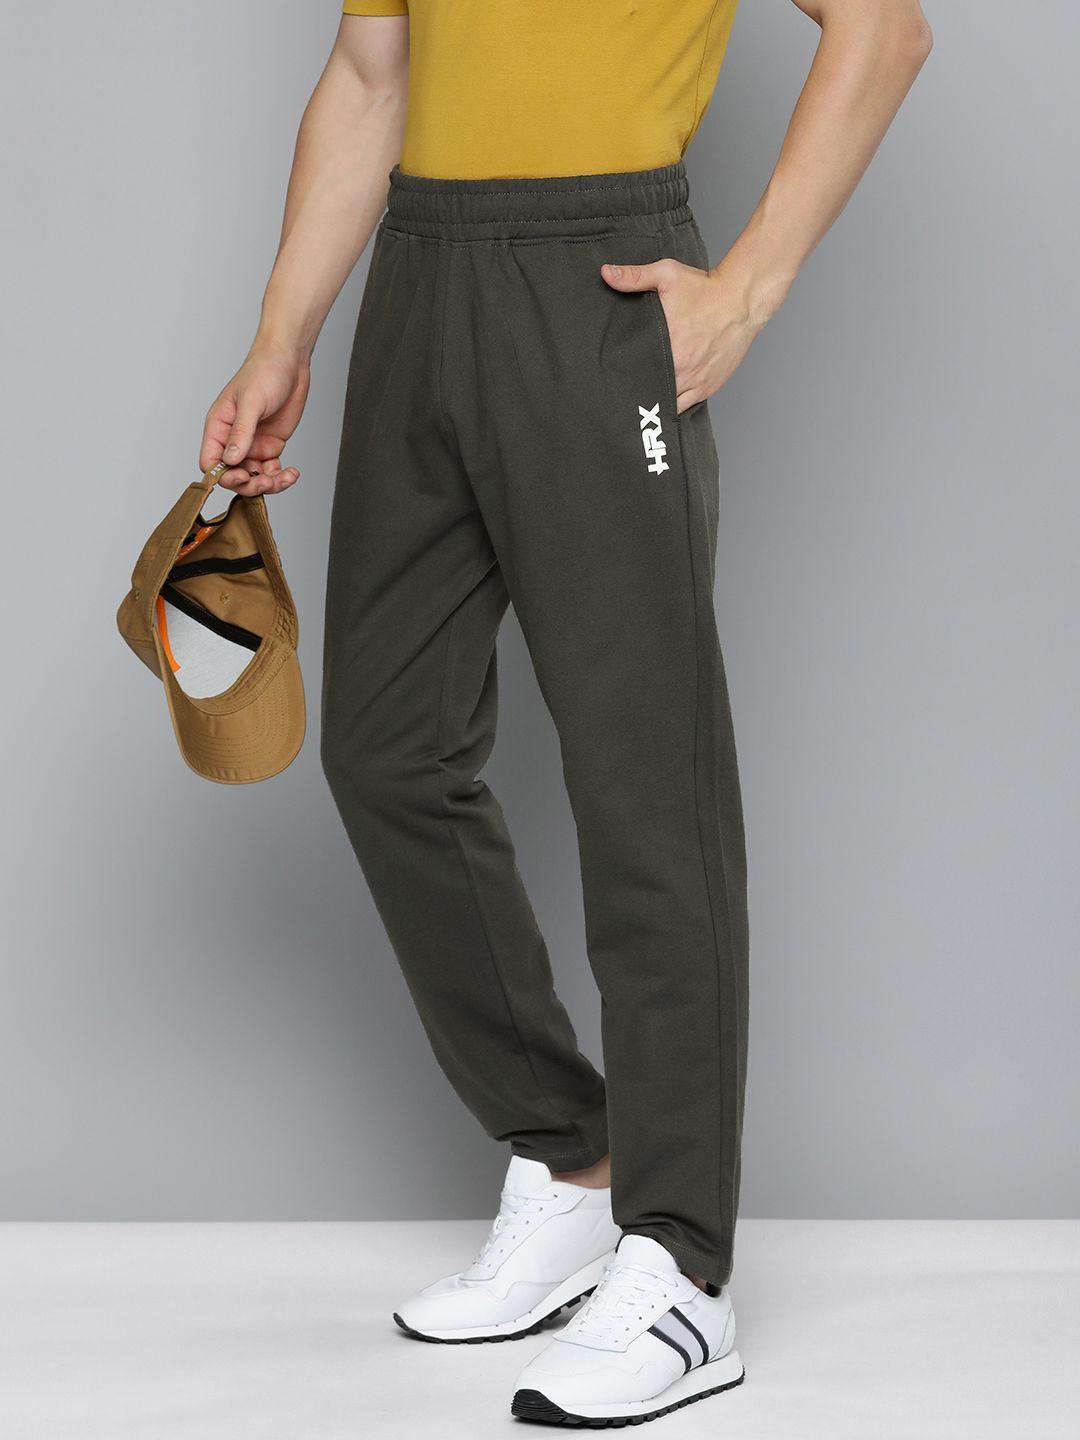 hrx-by-hrithik-roshan-lifestyle-men-bio-wash-brand-logo-printed-track-pants